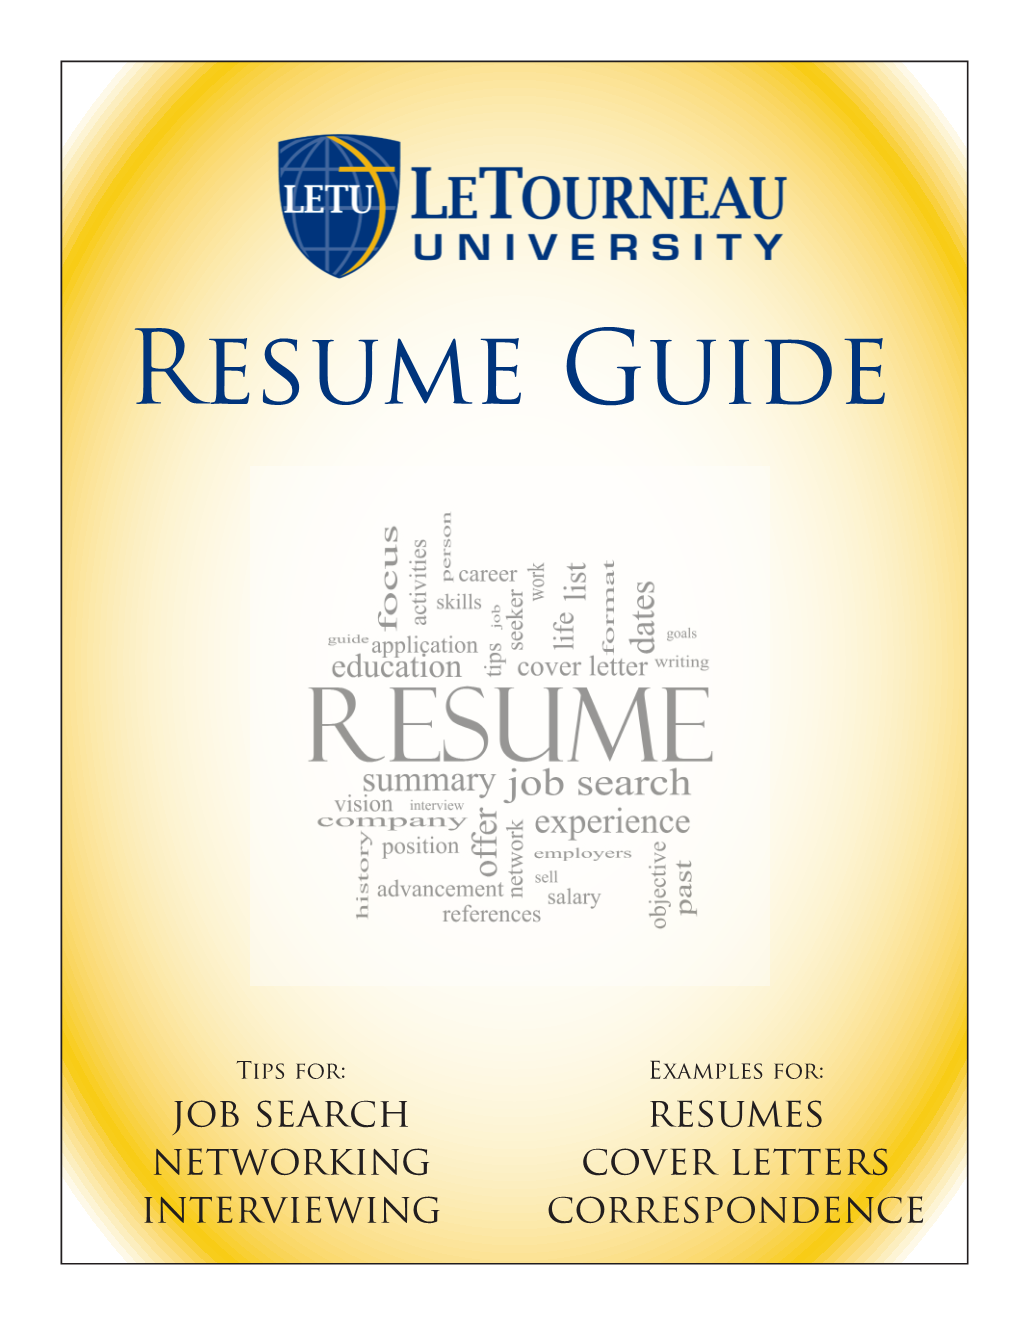 LETU Resume Guide